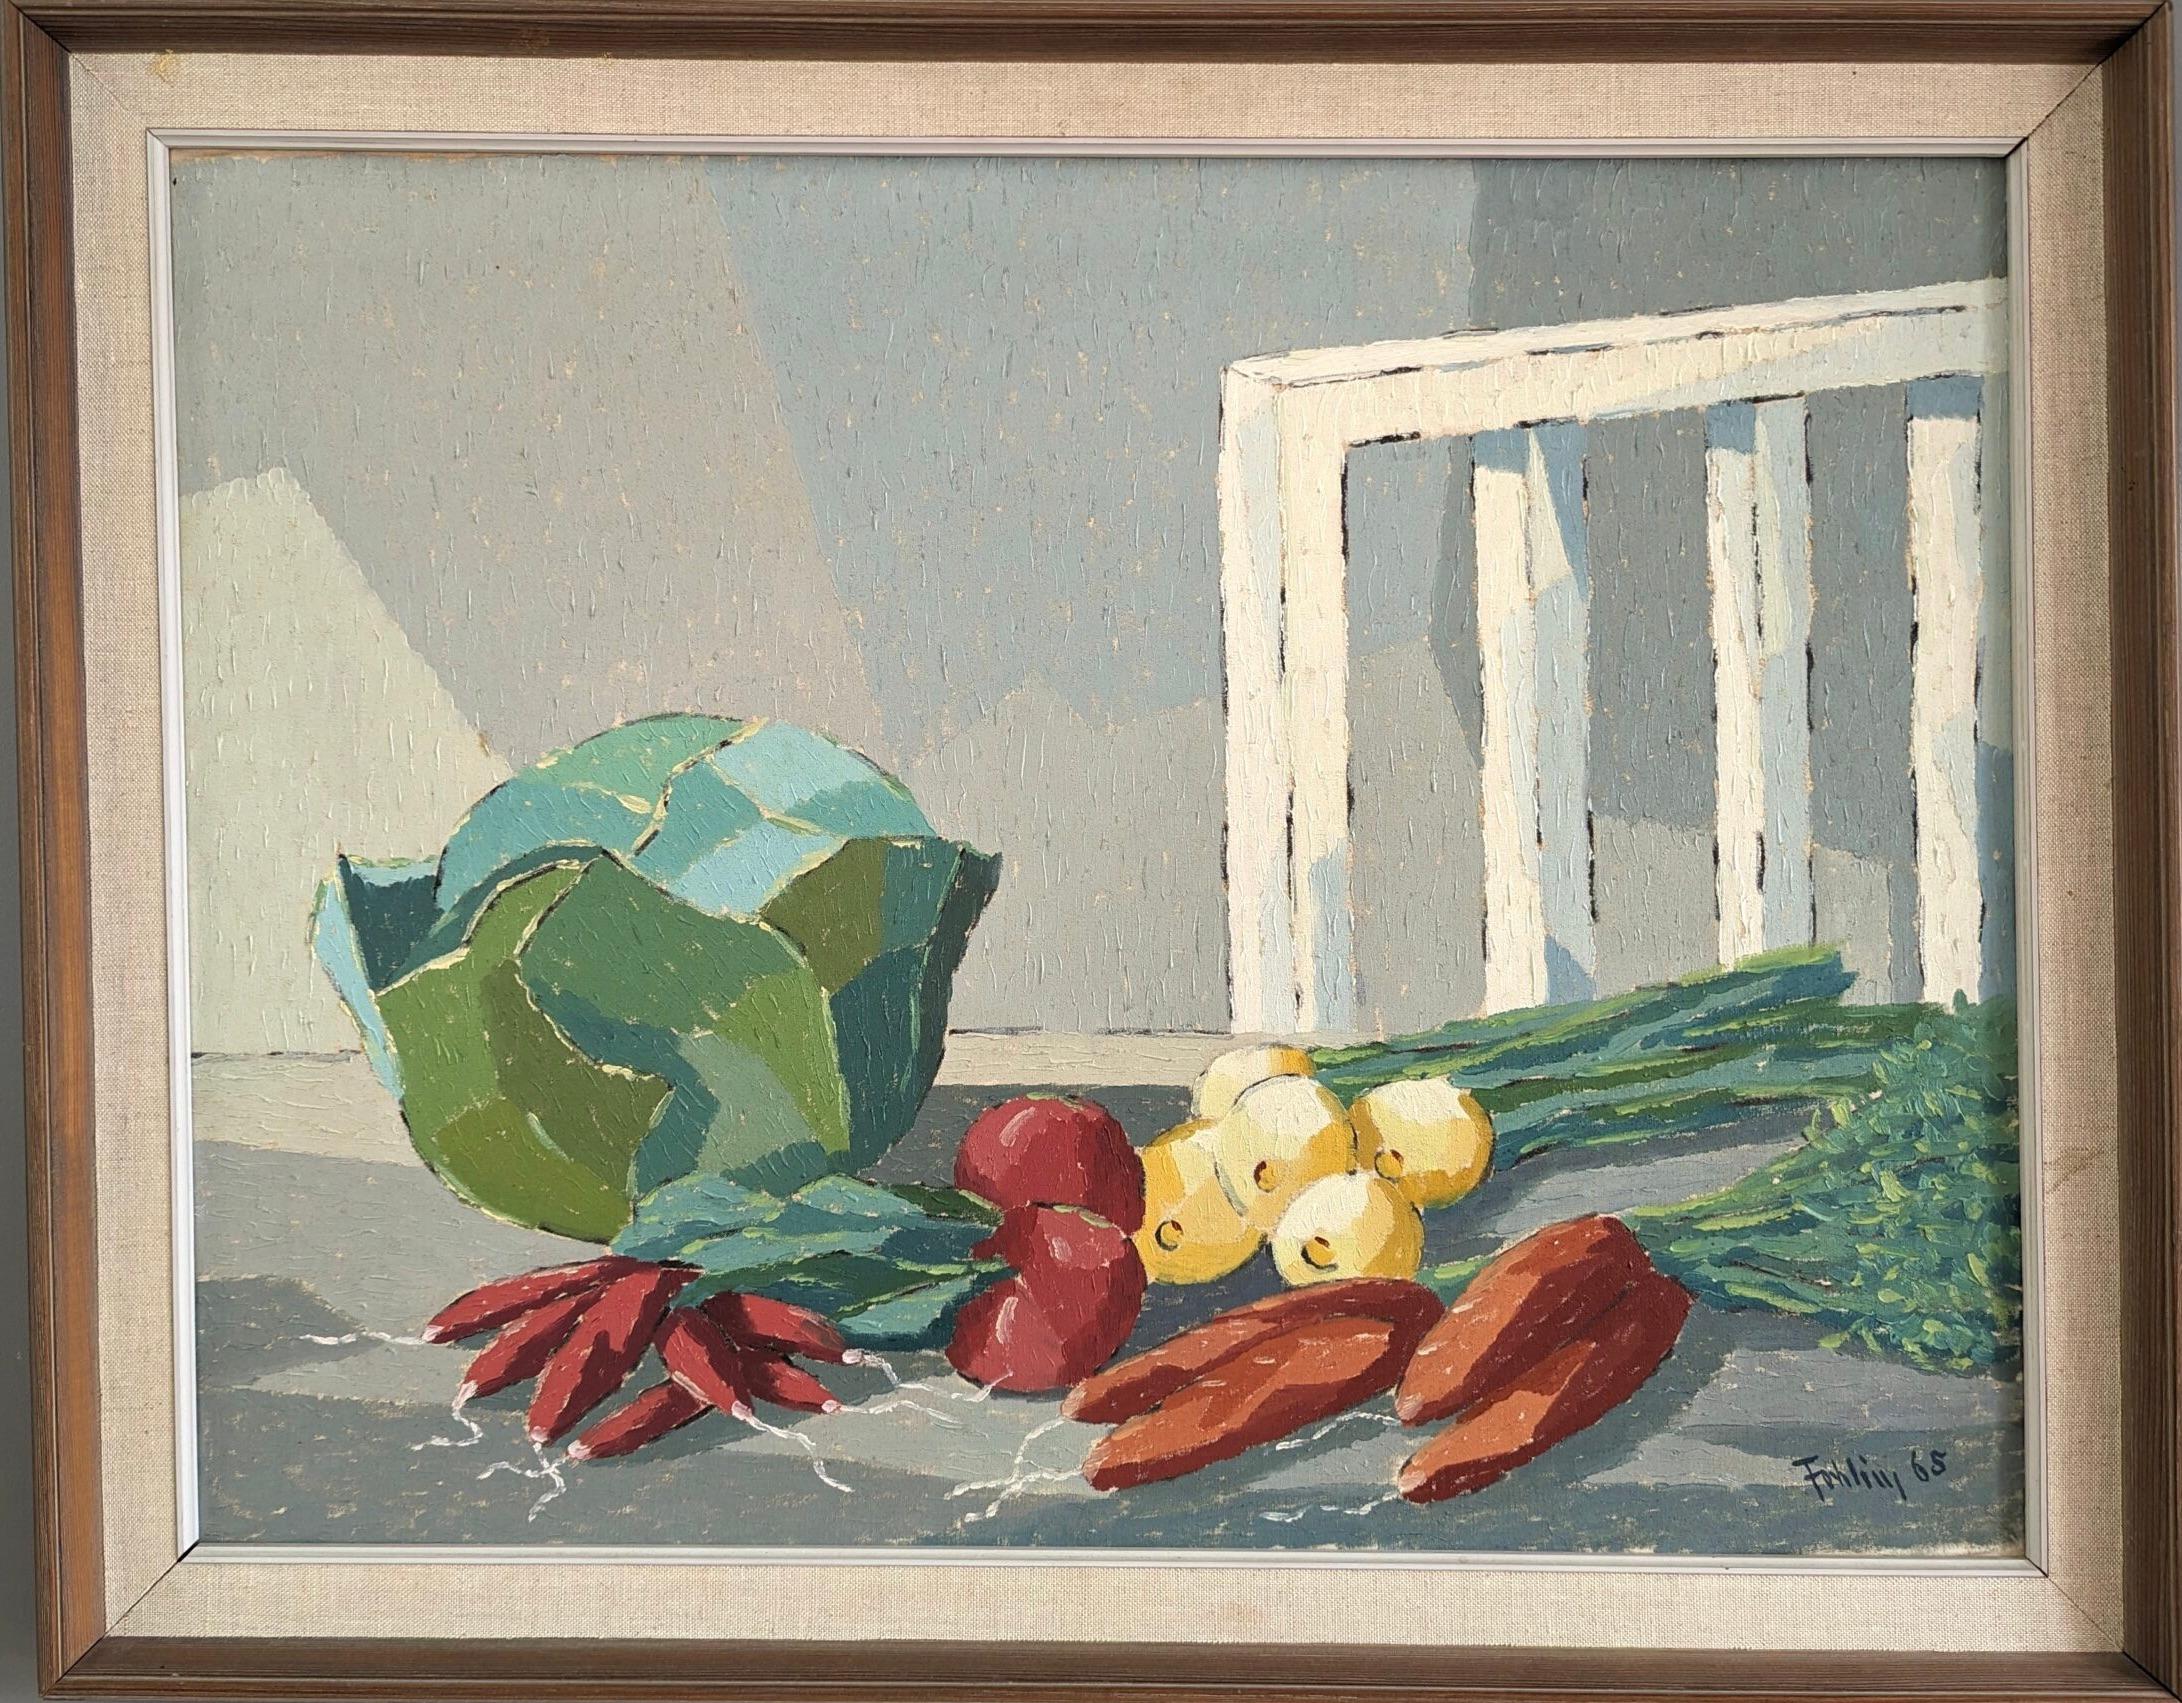 Unknown Still-Life Painting - 1965 Vintage Mid-Century Modern Swedish Still Life Oil Painting - Vegetables